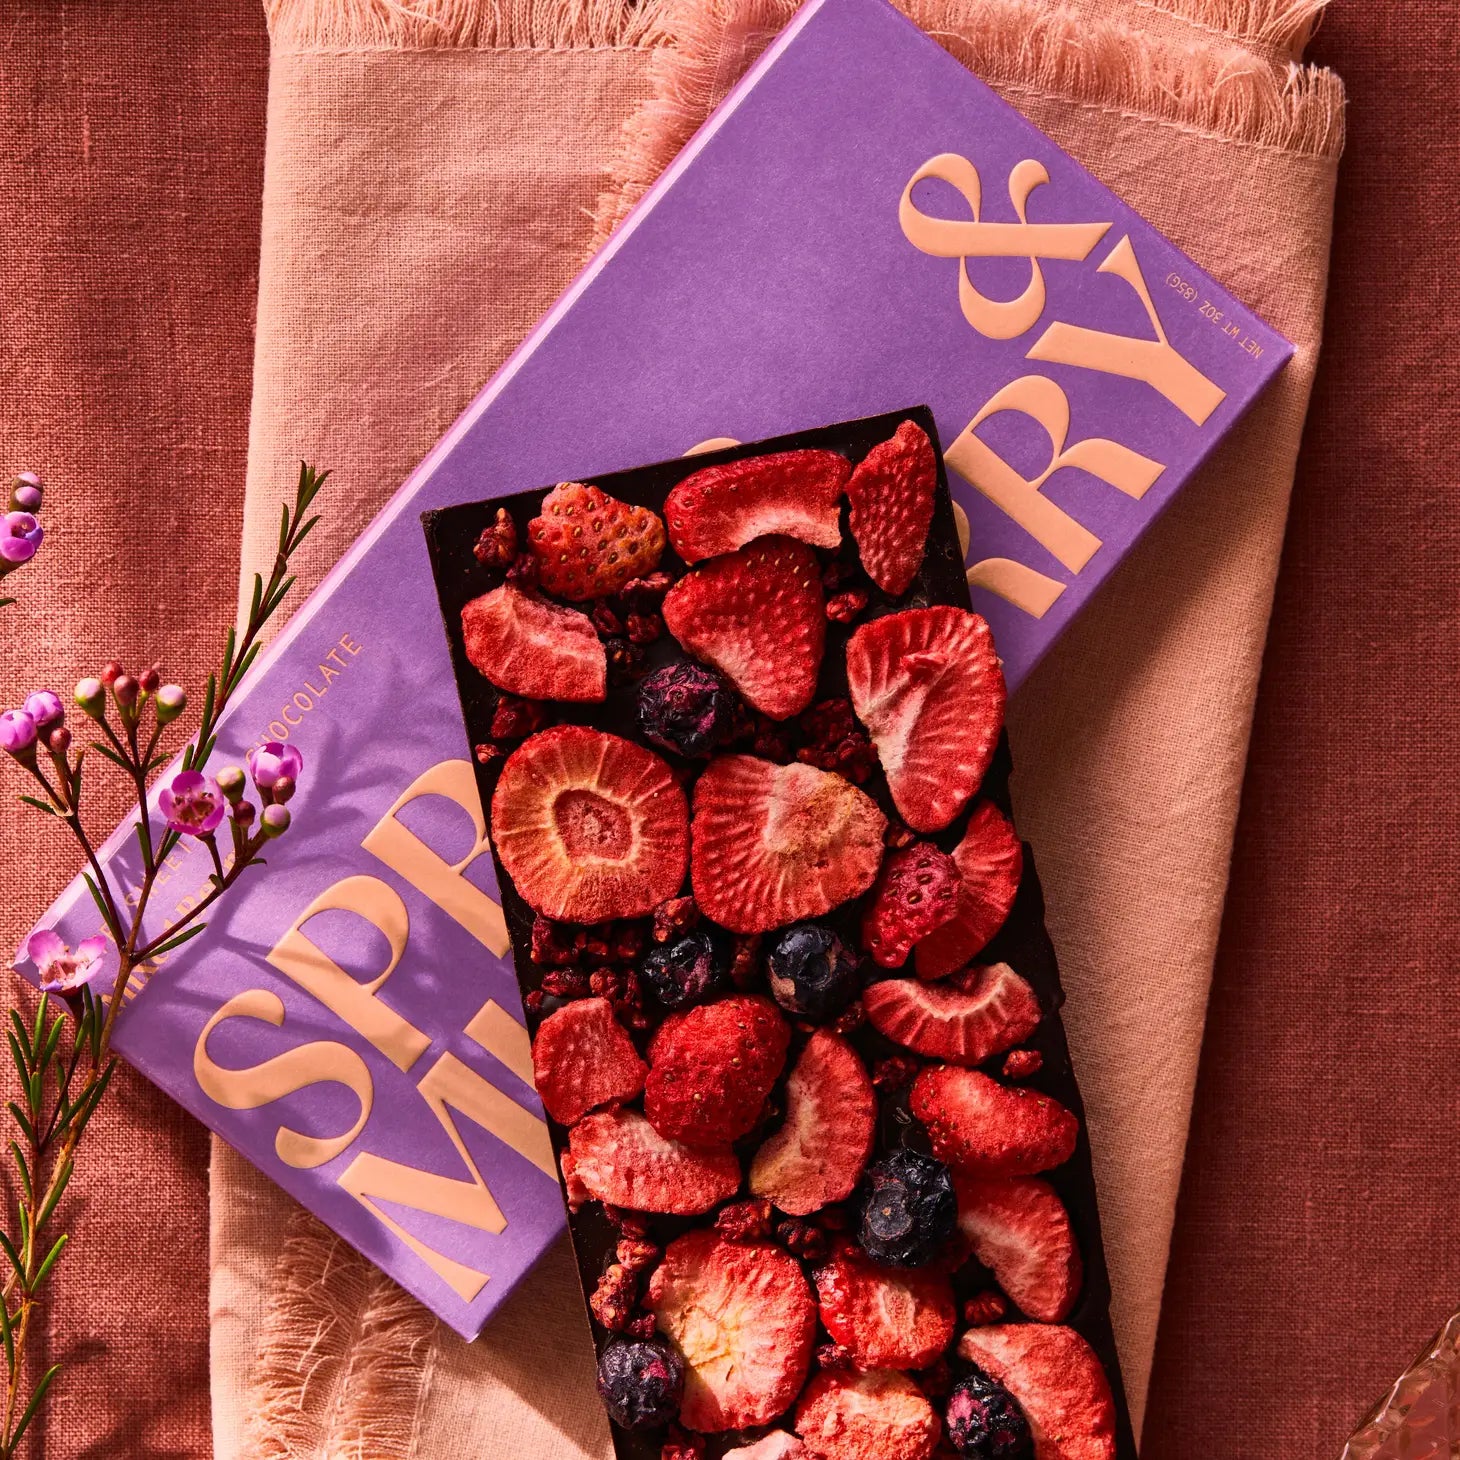 Mixed Berry, Date-Sweetened Chocolate